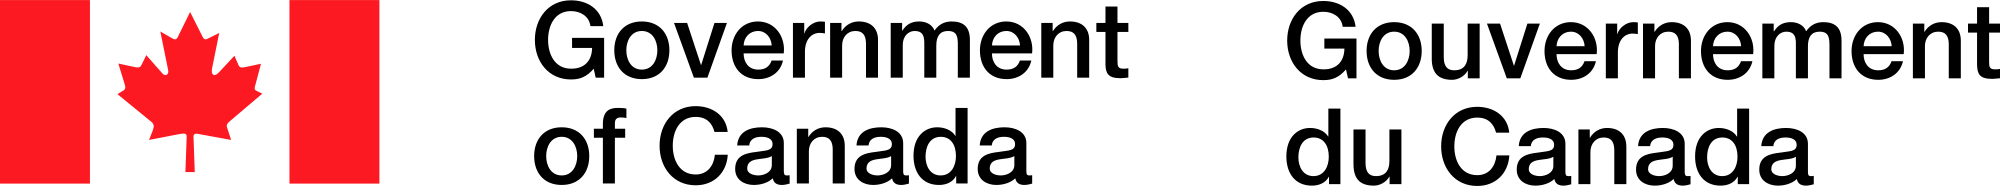 Canada Government Logo - Government of Canada Logo - Riverstone InsuranceRiverstone Insurance